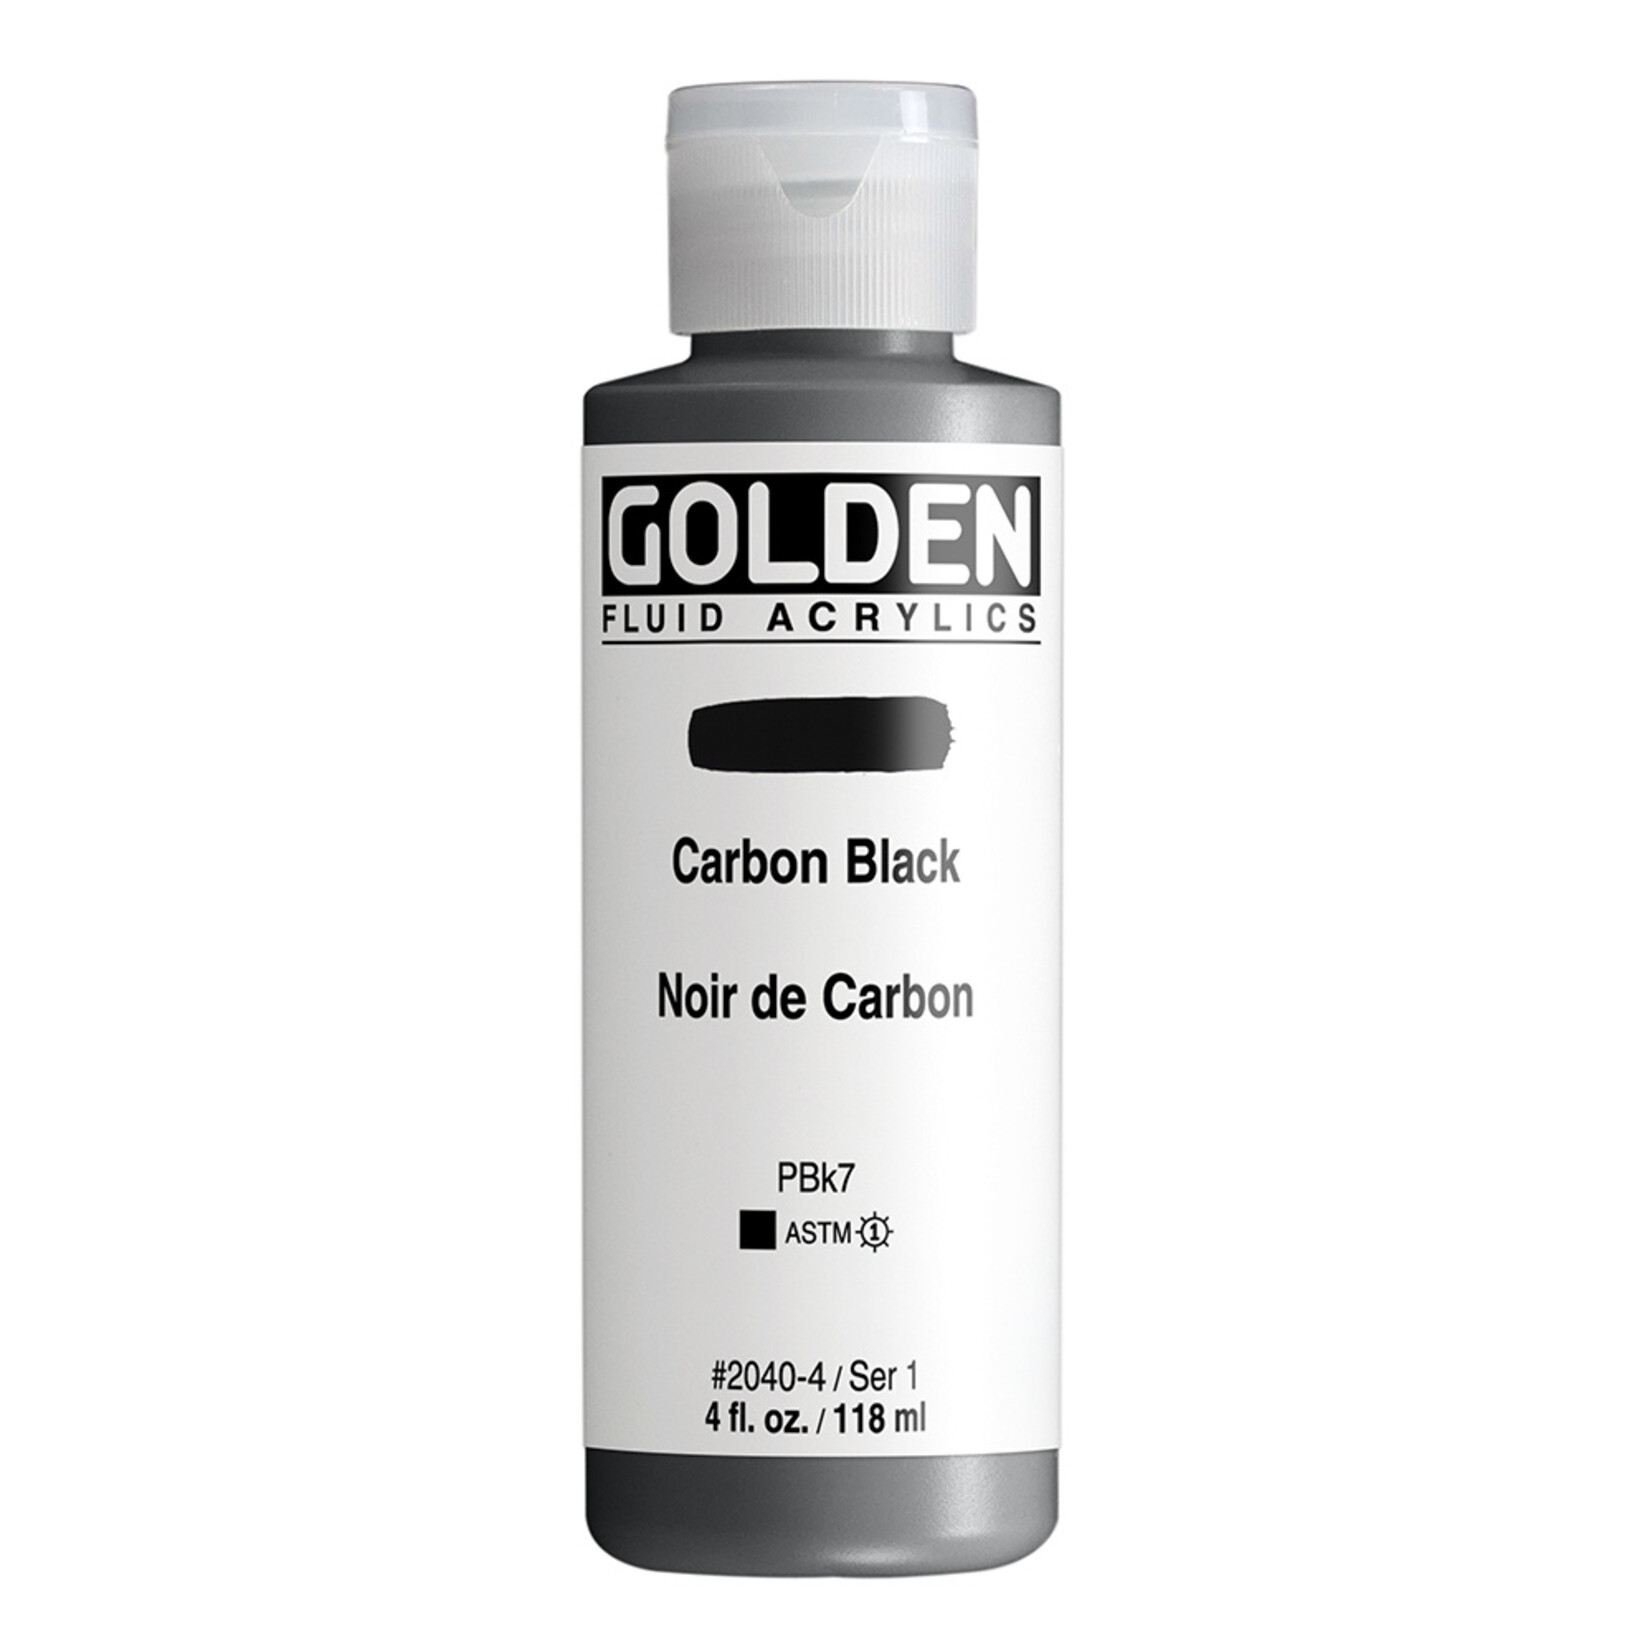 GOLDEN GOLDEN FLUID ACRYLIC 4OZ CARBON BLACK